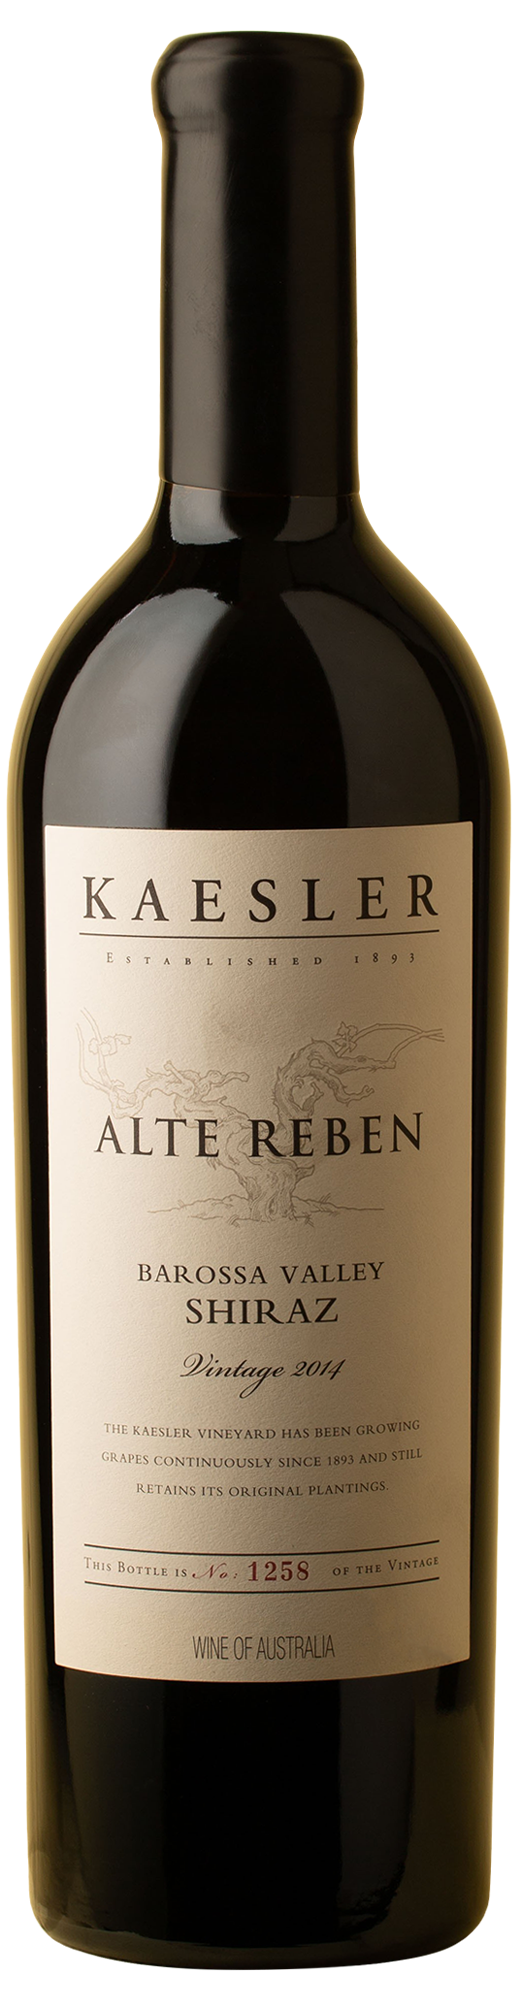 Kaesler - Alte Reben Shiraz 2014 Red Wine